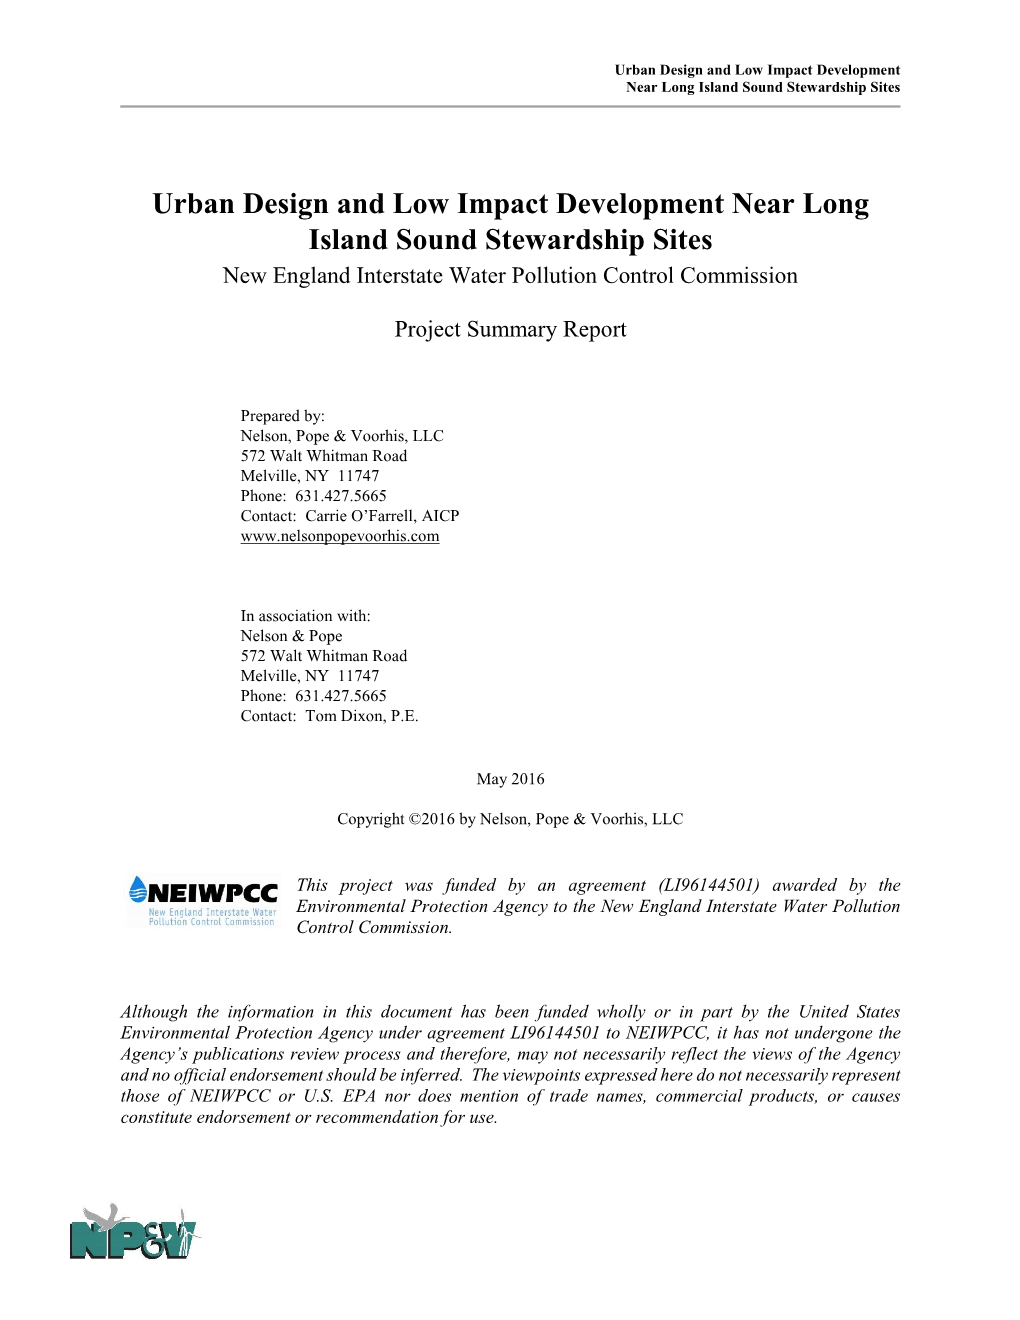 Urban Design and Low Impact Development Near Long Island Sound Stewardship Sites